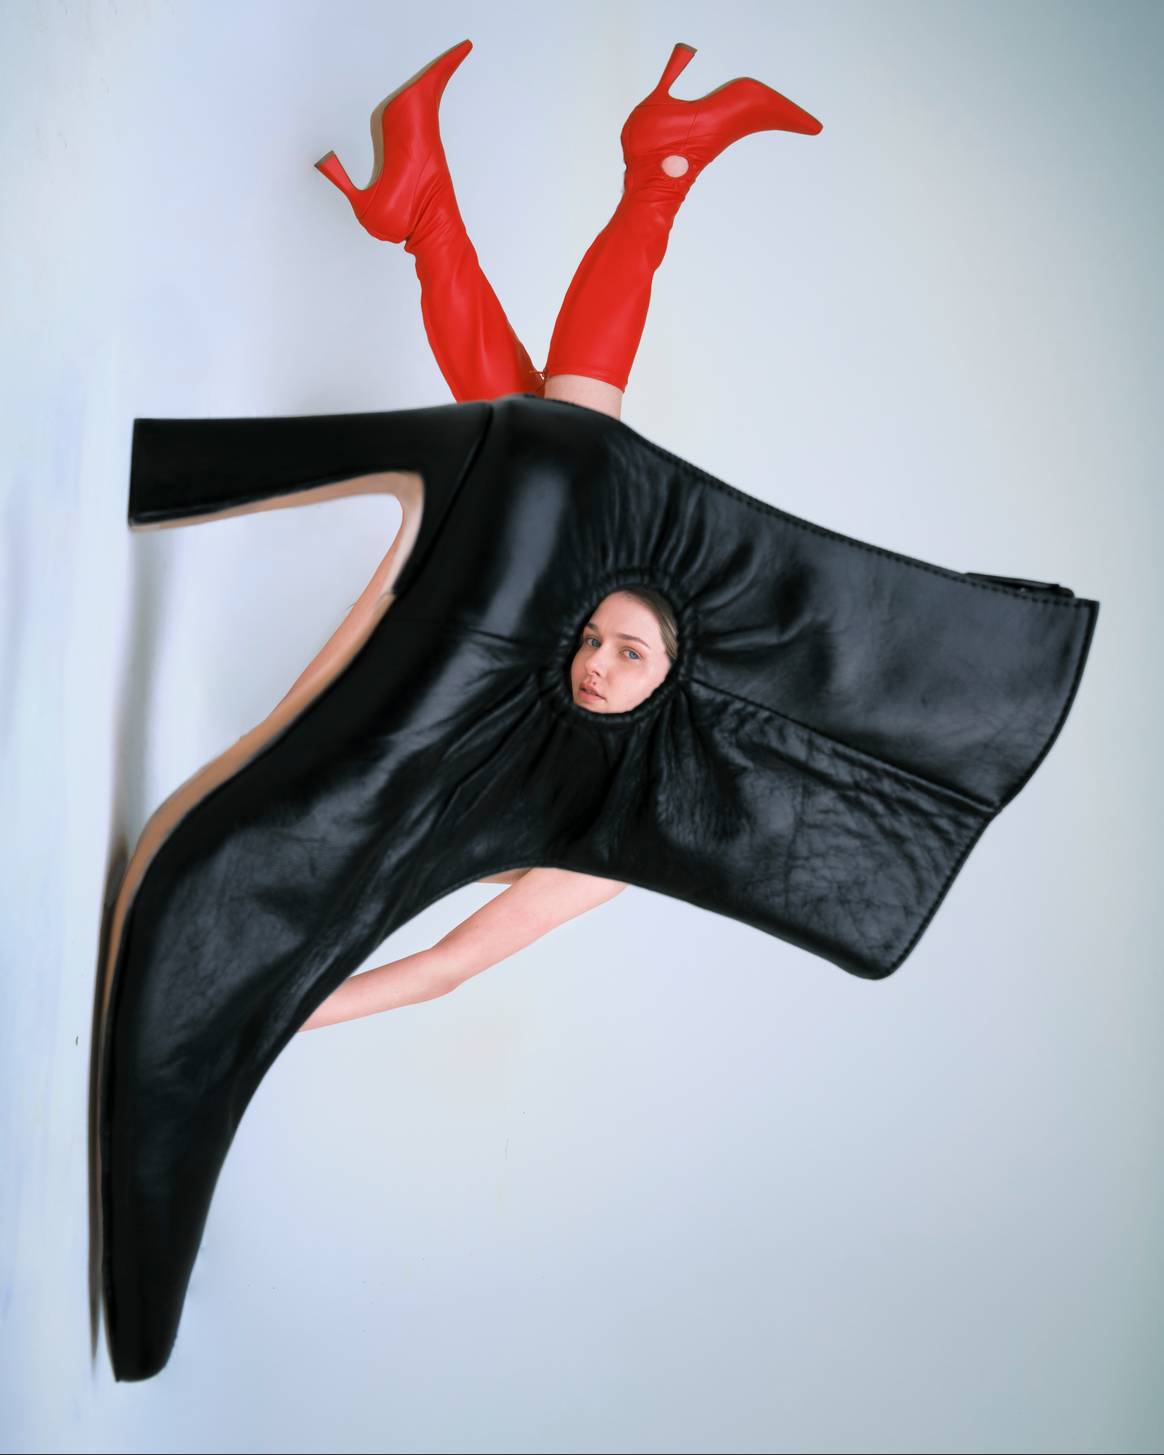 Kalda footwear campaign imagery. Image: Kalda